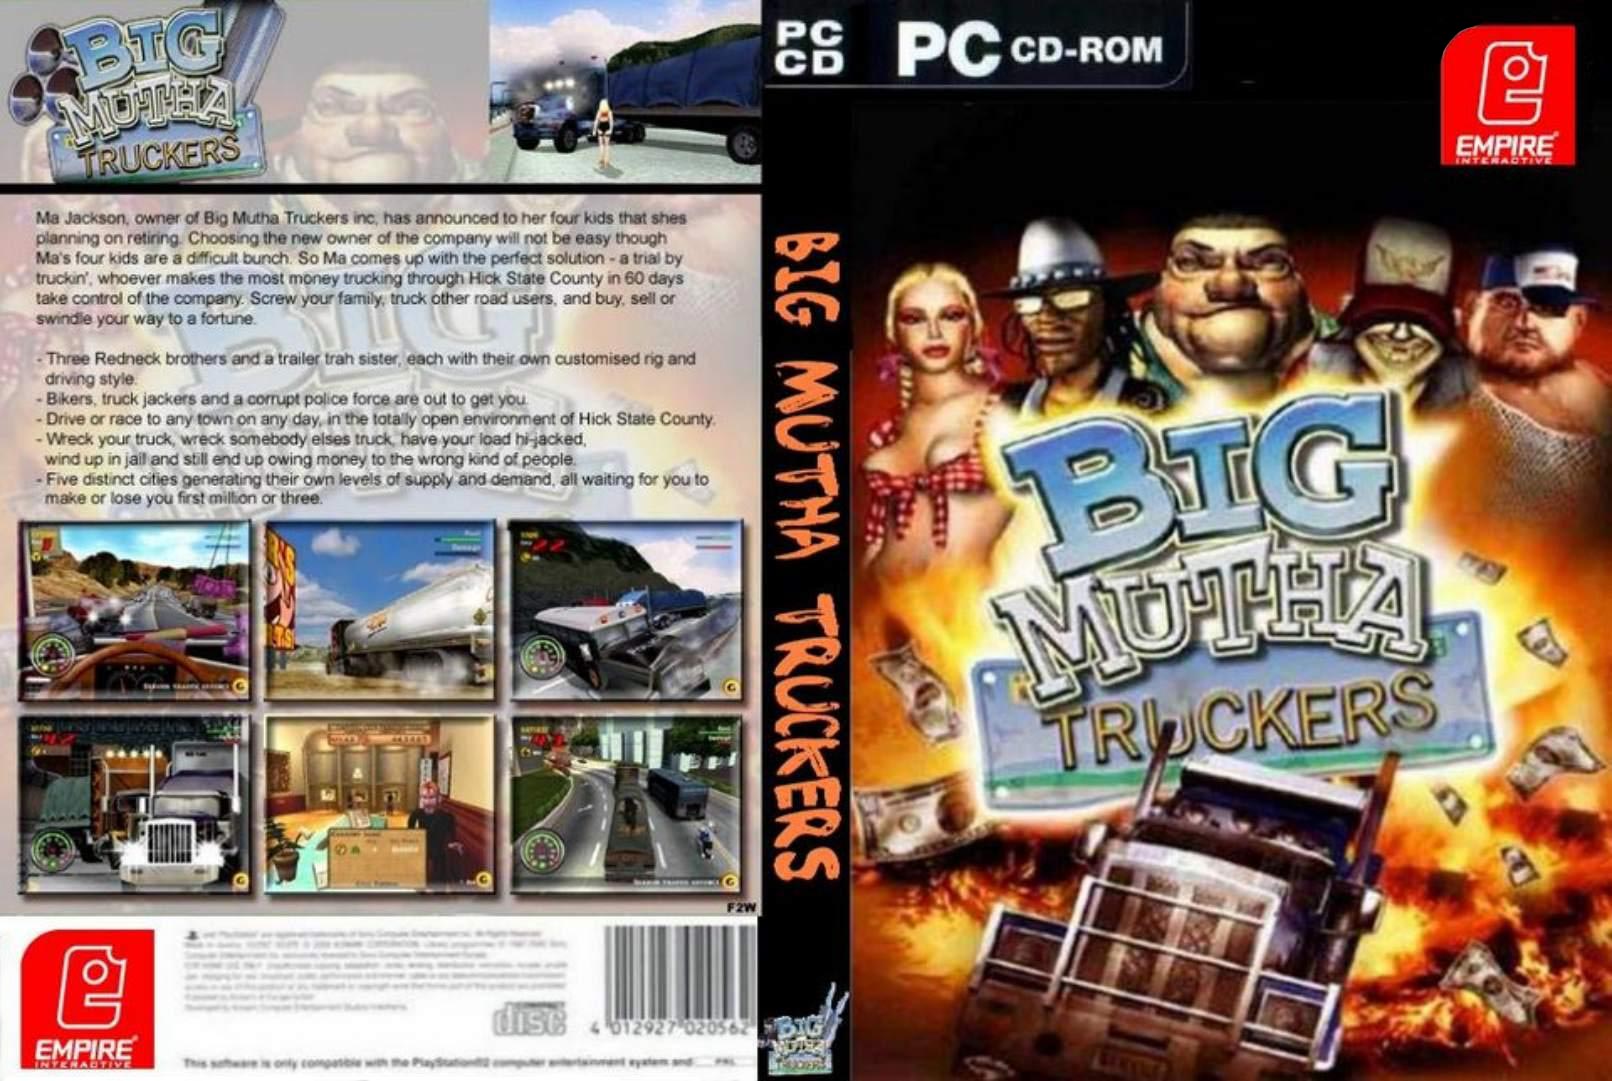 Big Mutha Truckers - DVD obal